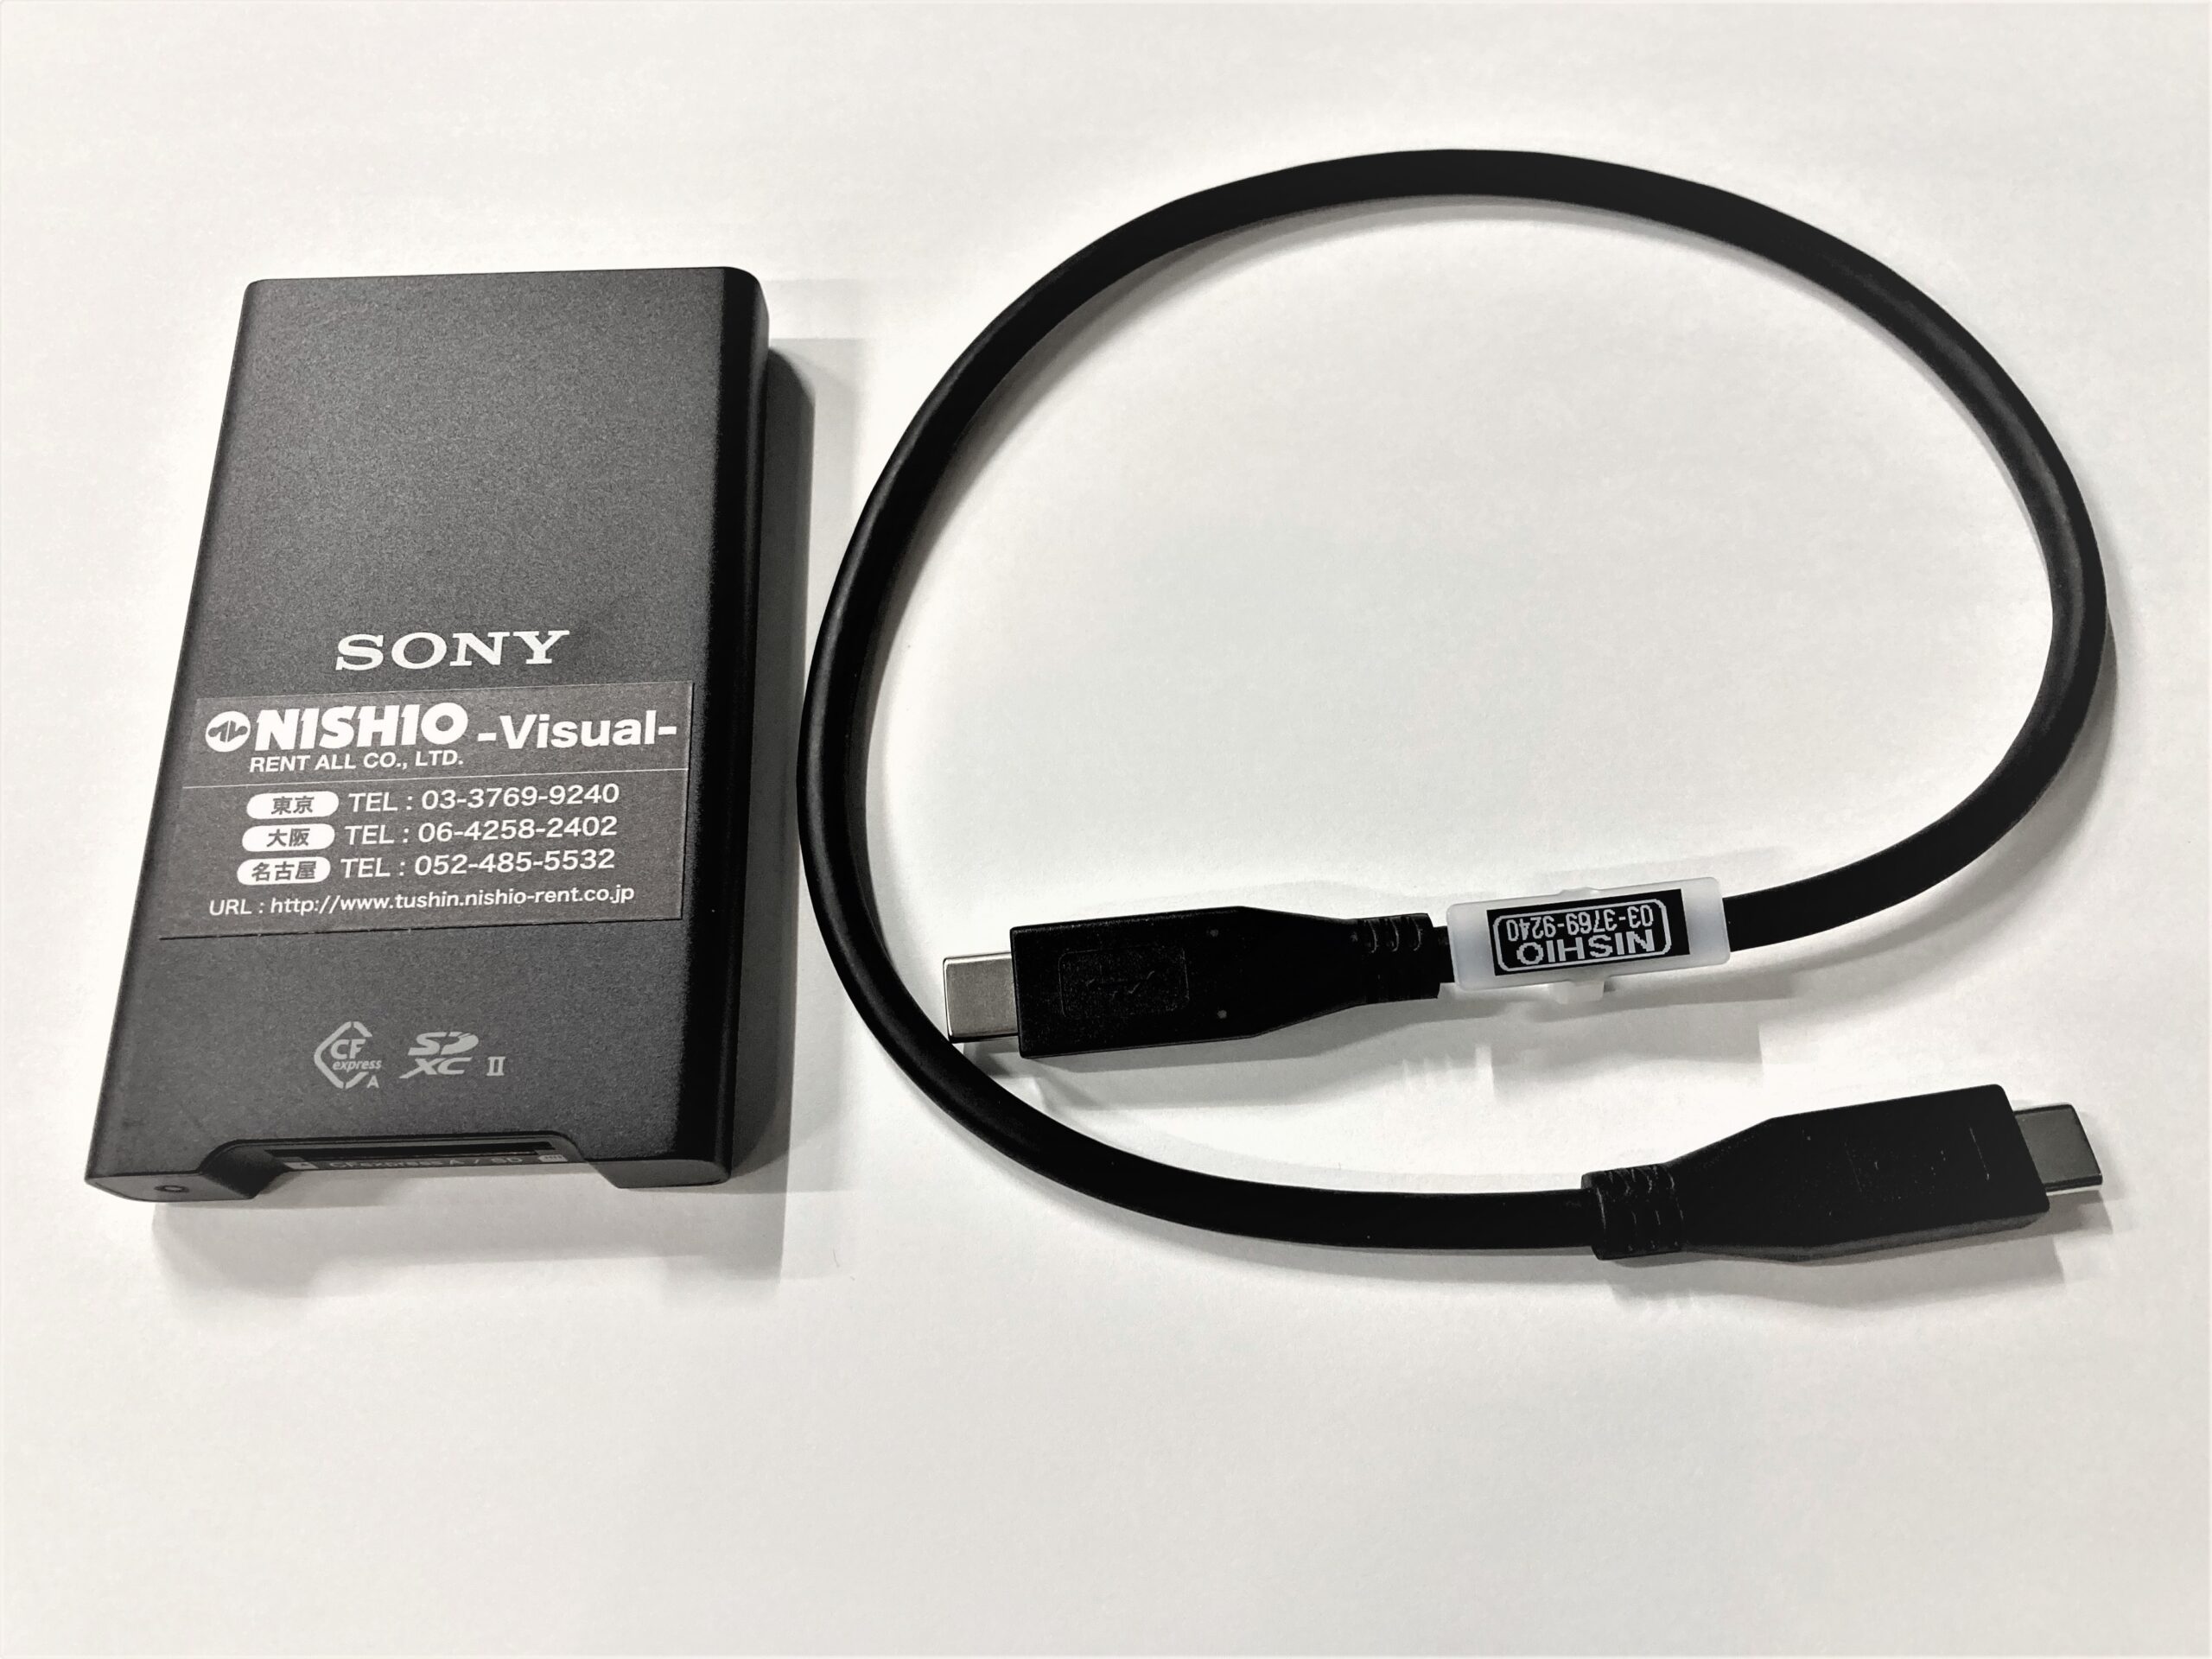 SONY CFexpress Type A / SD カードリーダー-